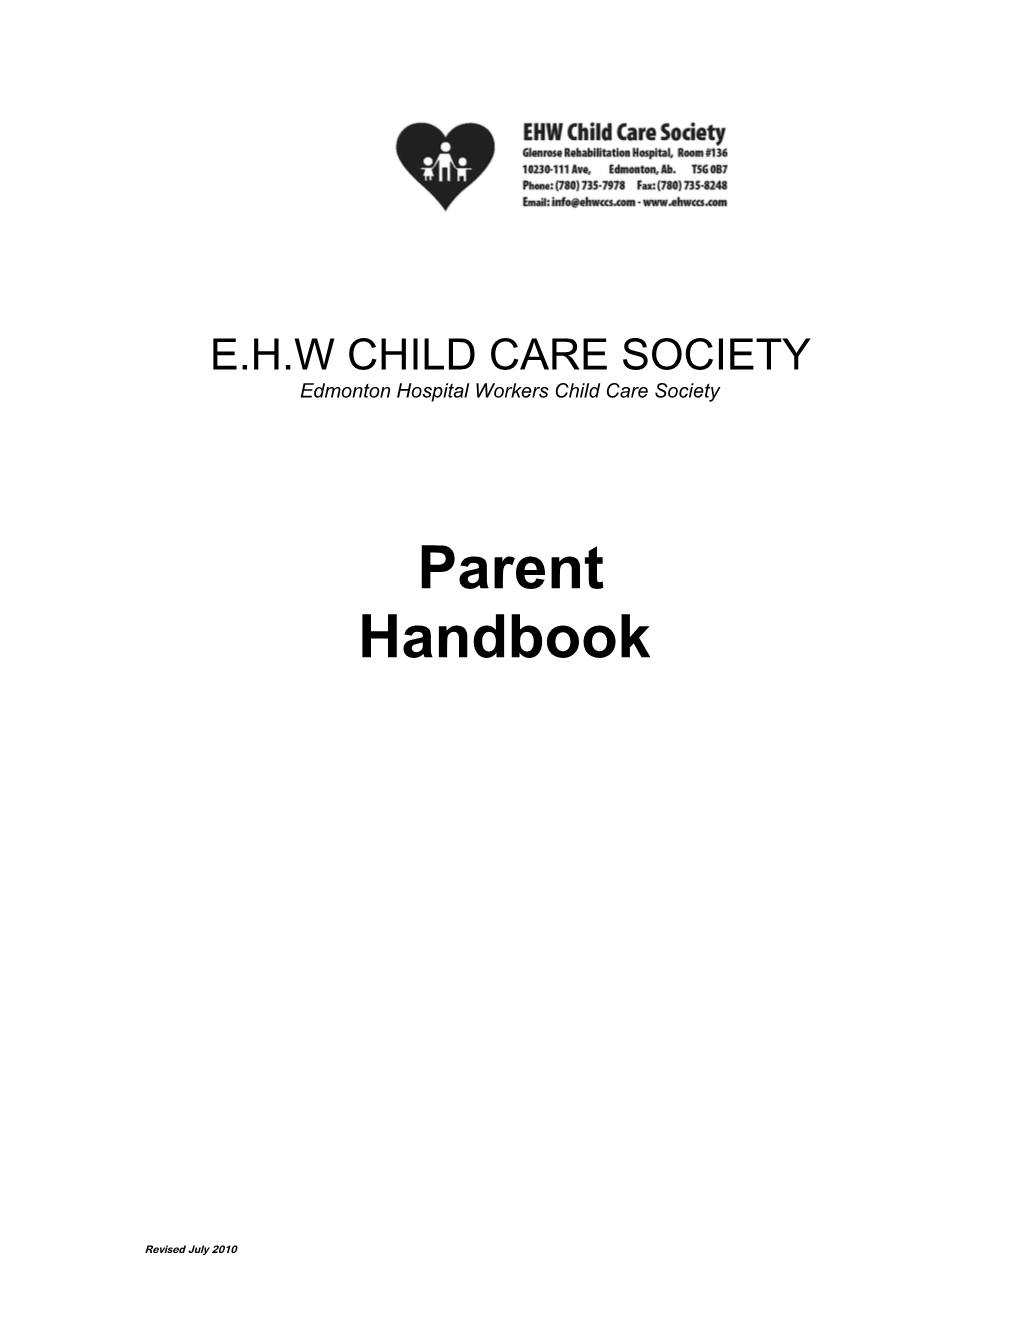 Edmonton Hospital Workers Child Care Society